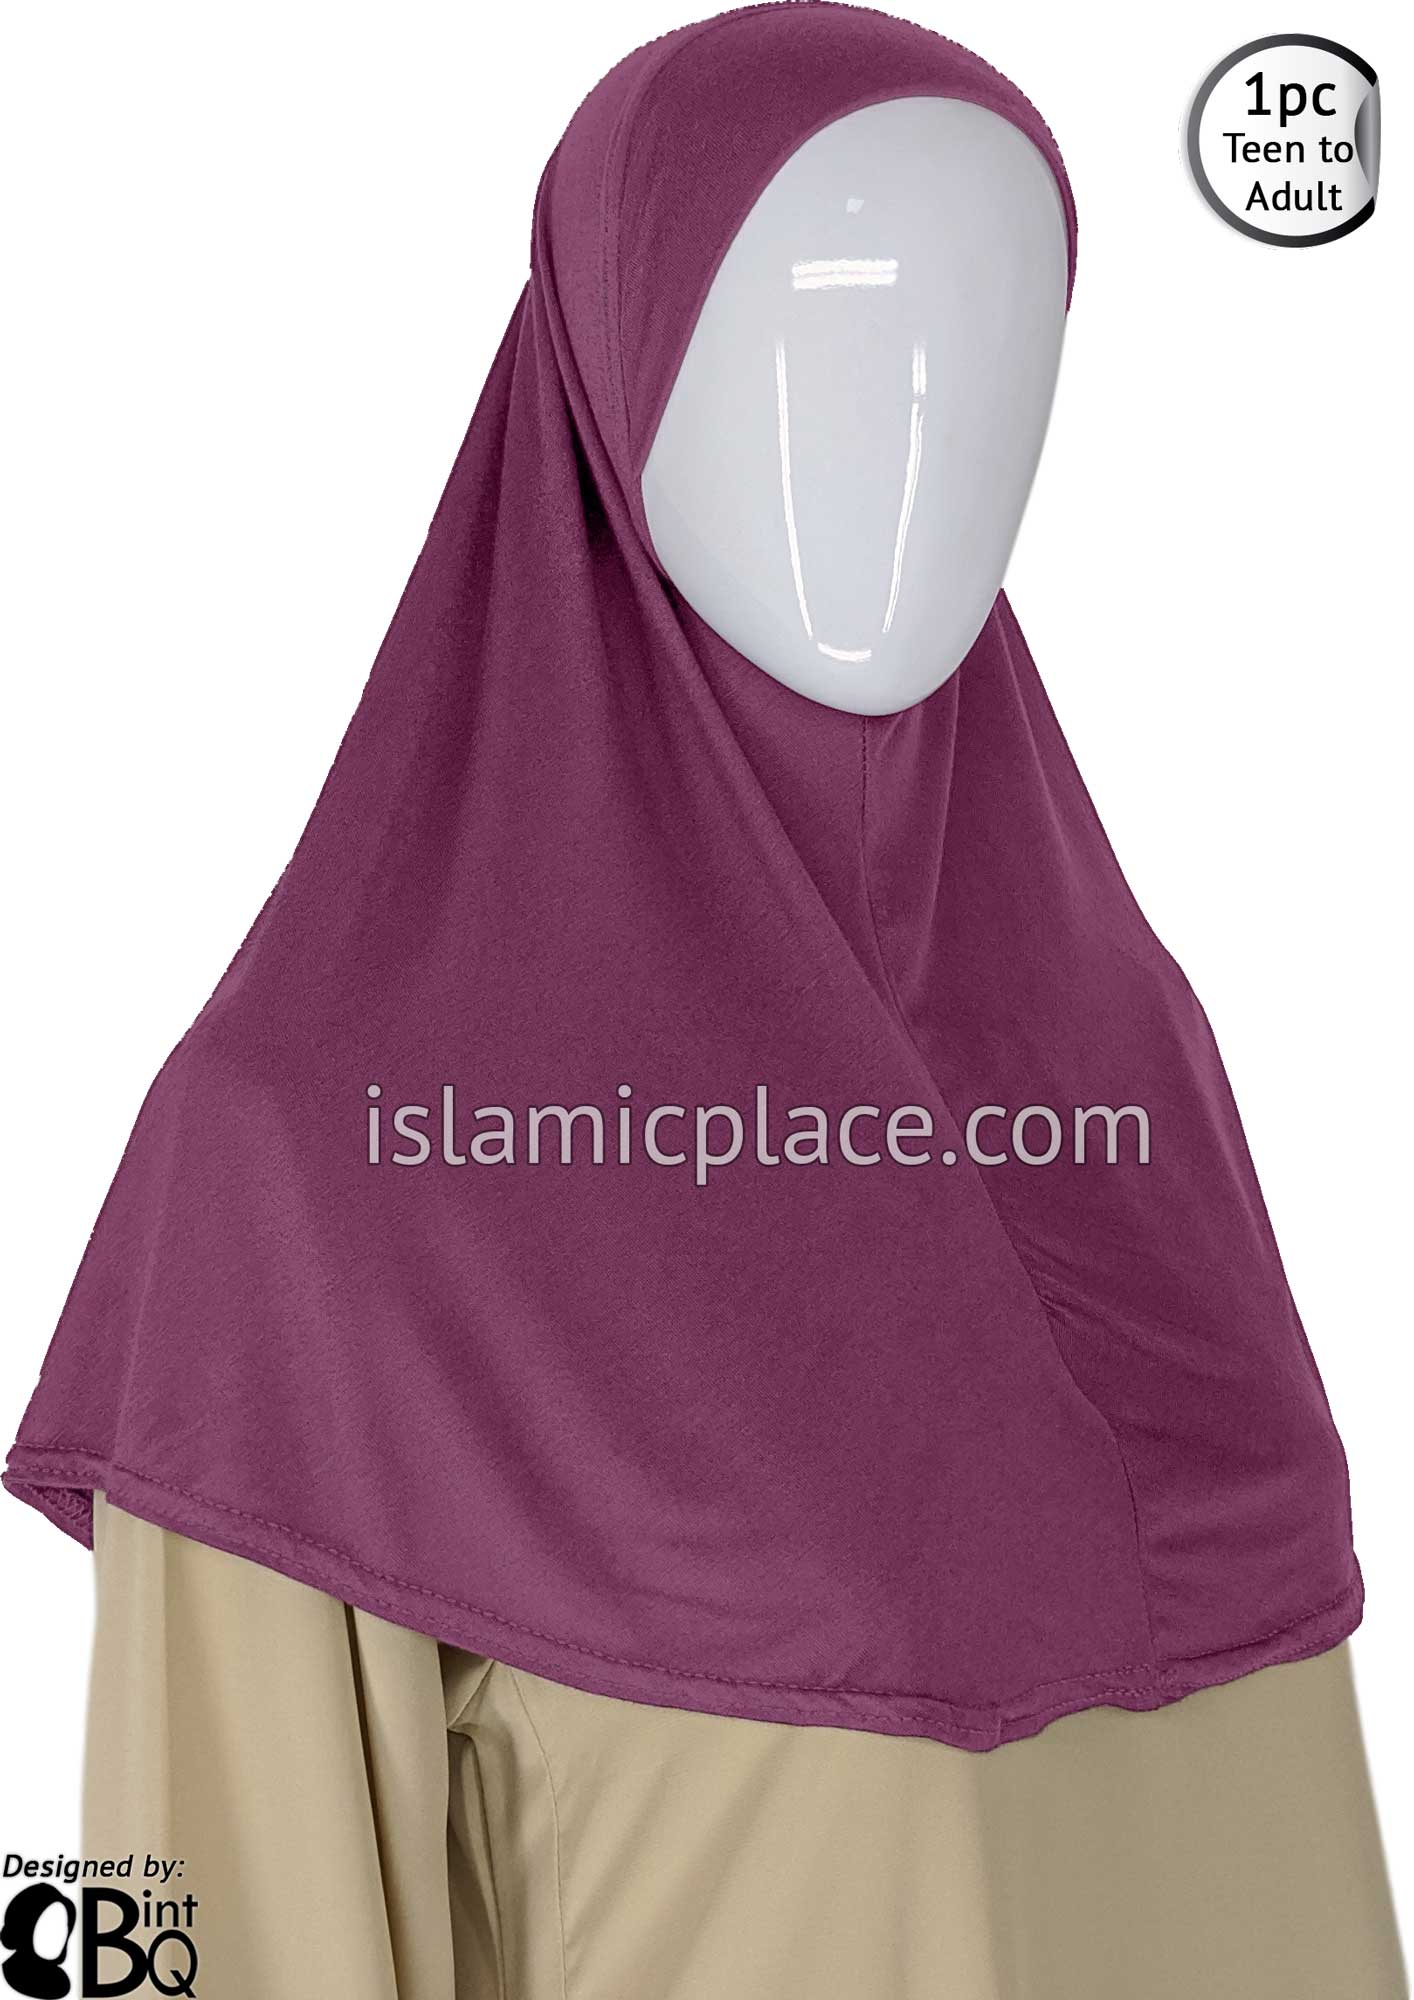 Concord Grape - Plain Teen to Adult (Large) Hijab Al-Amira (1-piece style)